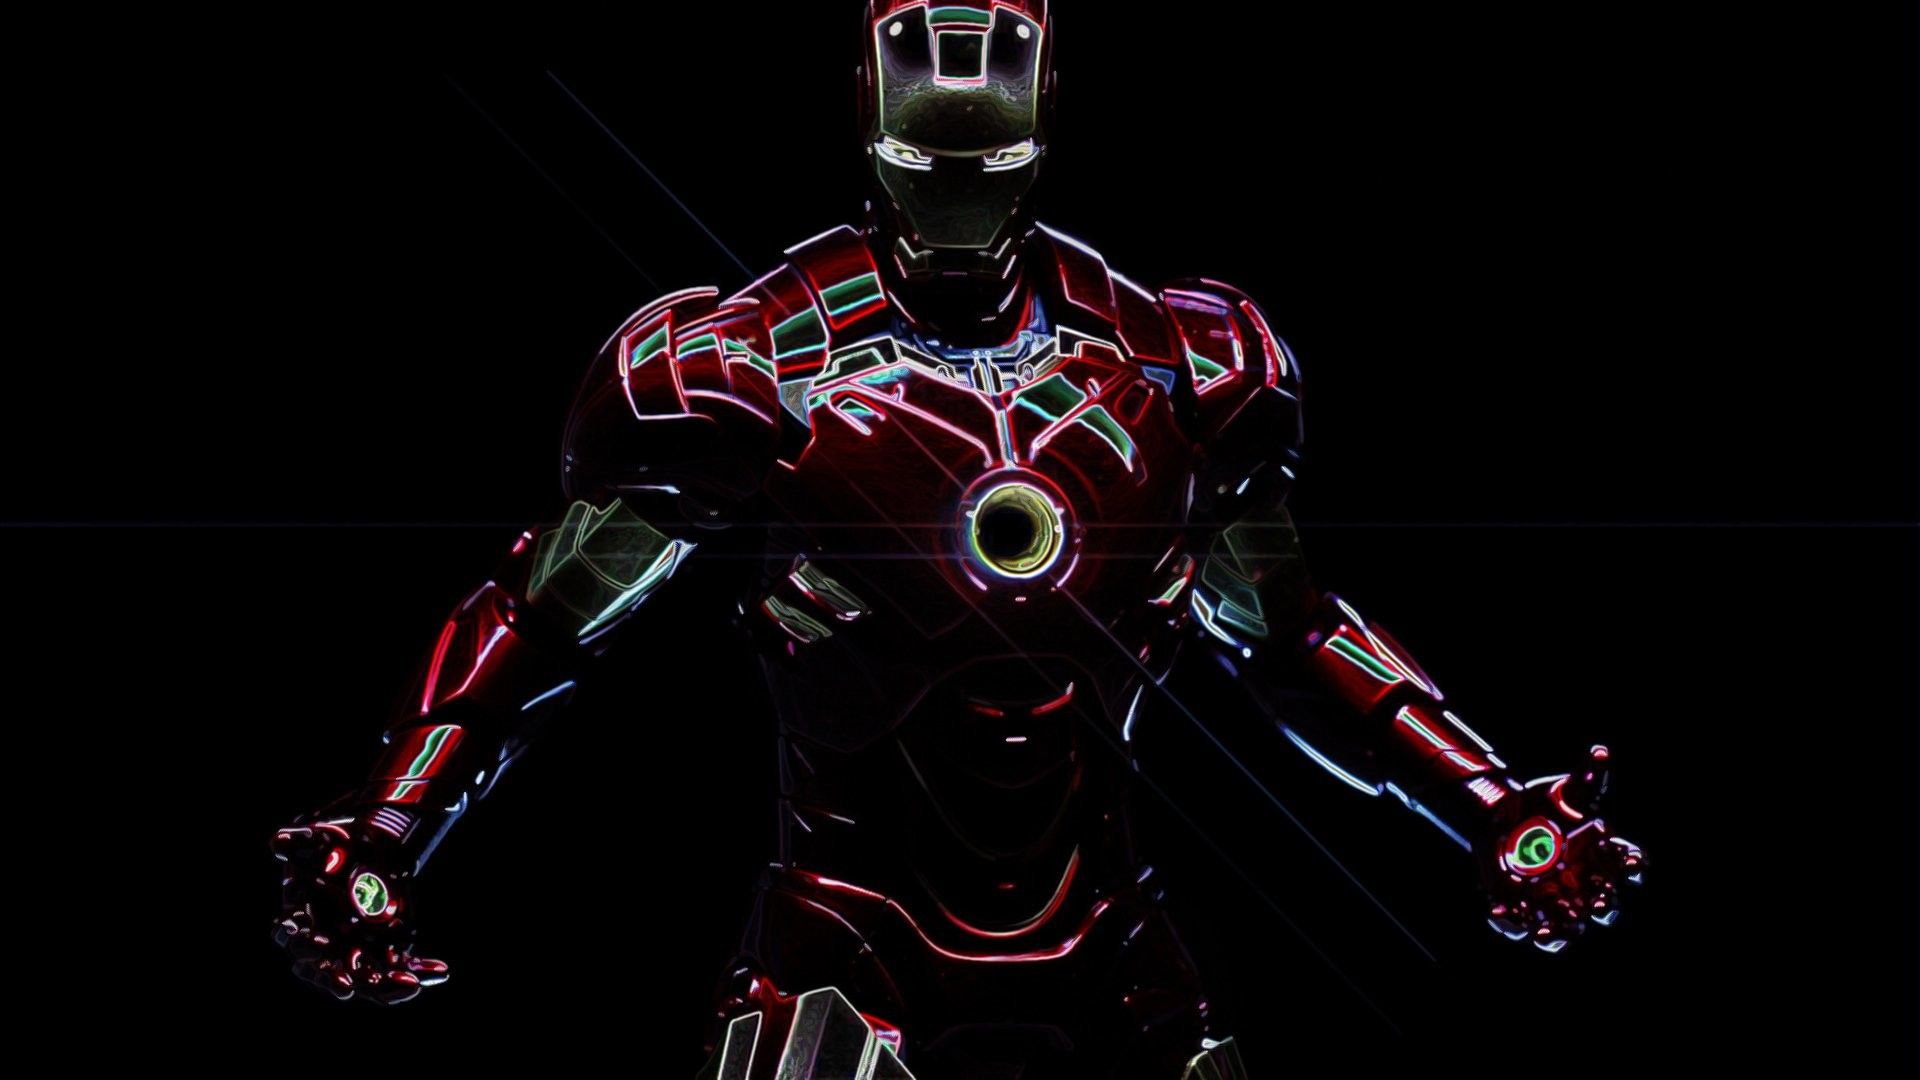 Free download Iron Man 4K Wallpaper - [1920x1080] for your Desktop, Mobile & Tablet. Explore Iron Man 4K Wallpaperk Iron Man Wallpaper, Iron Man 4K Wallpaper, Iron Man 4K Wallpaper